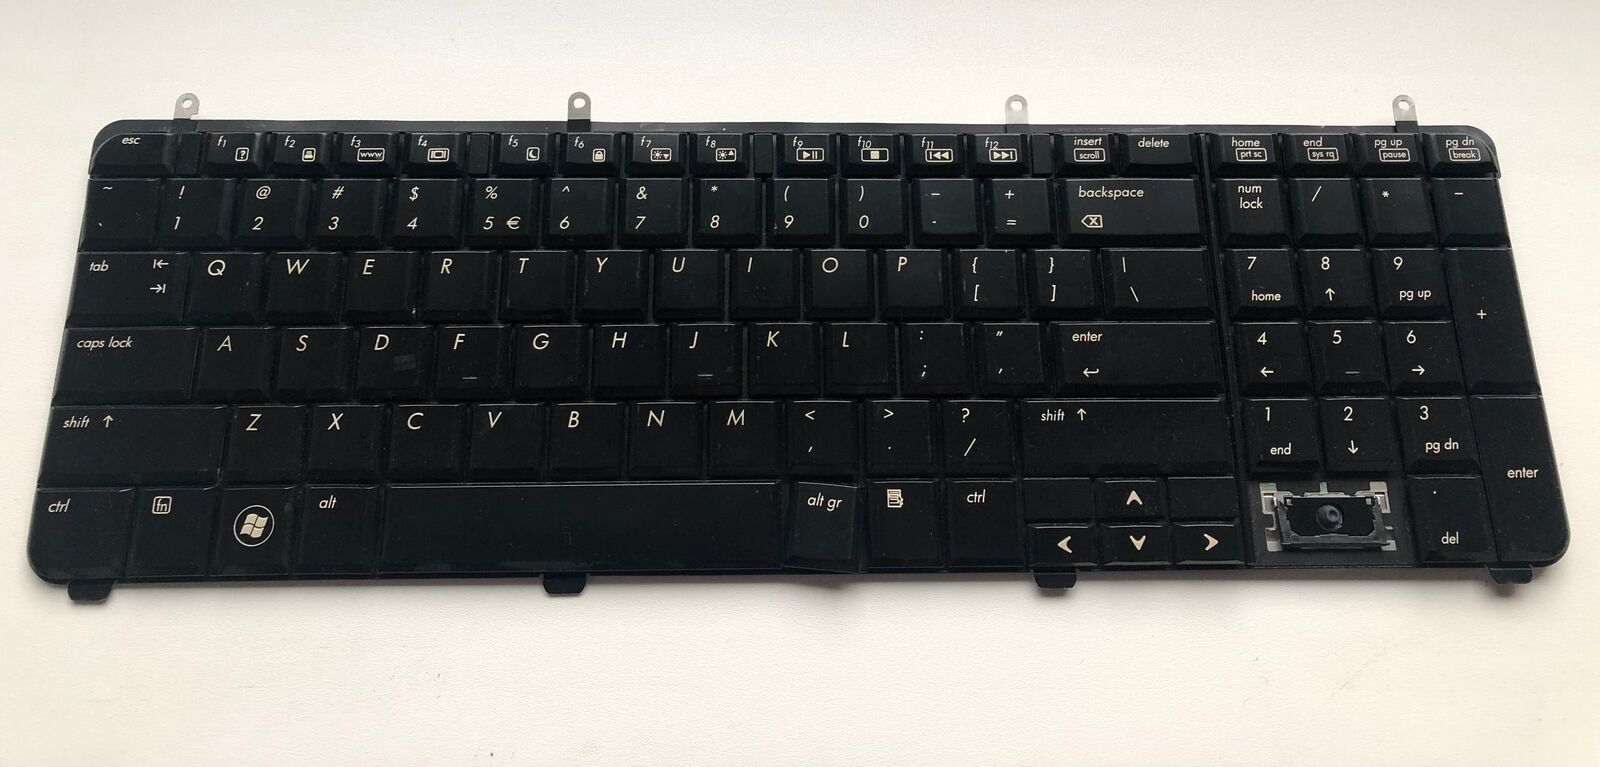 519004-B31 keyboard - HP DV7 - for parts